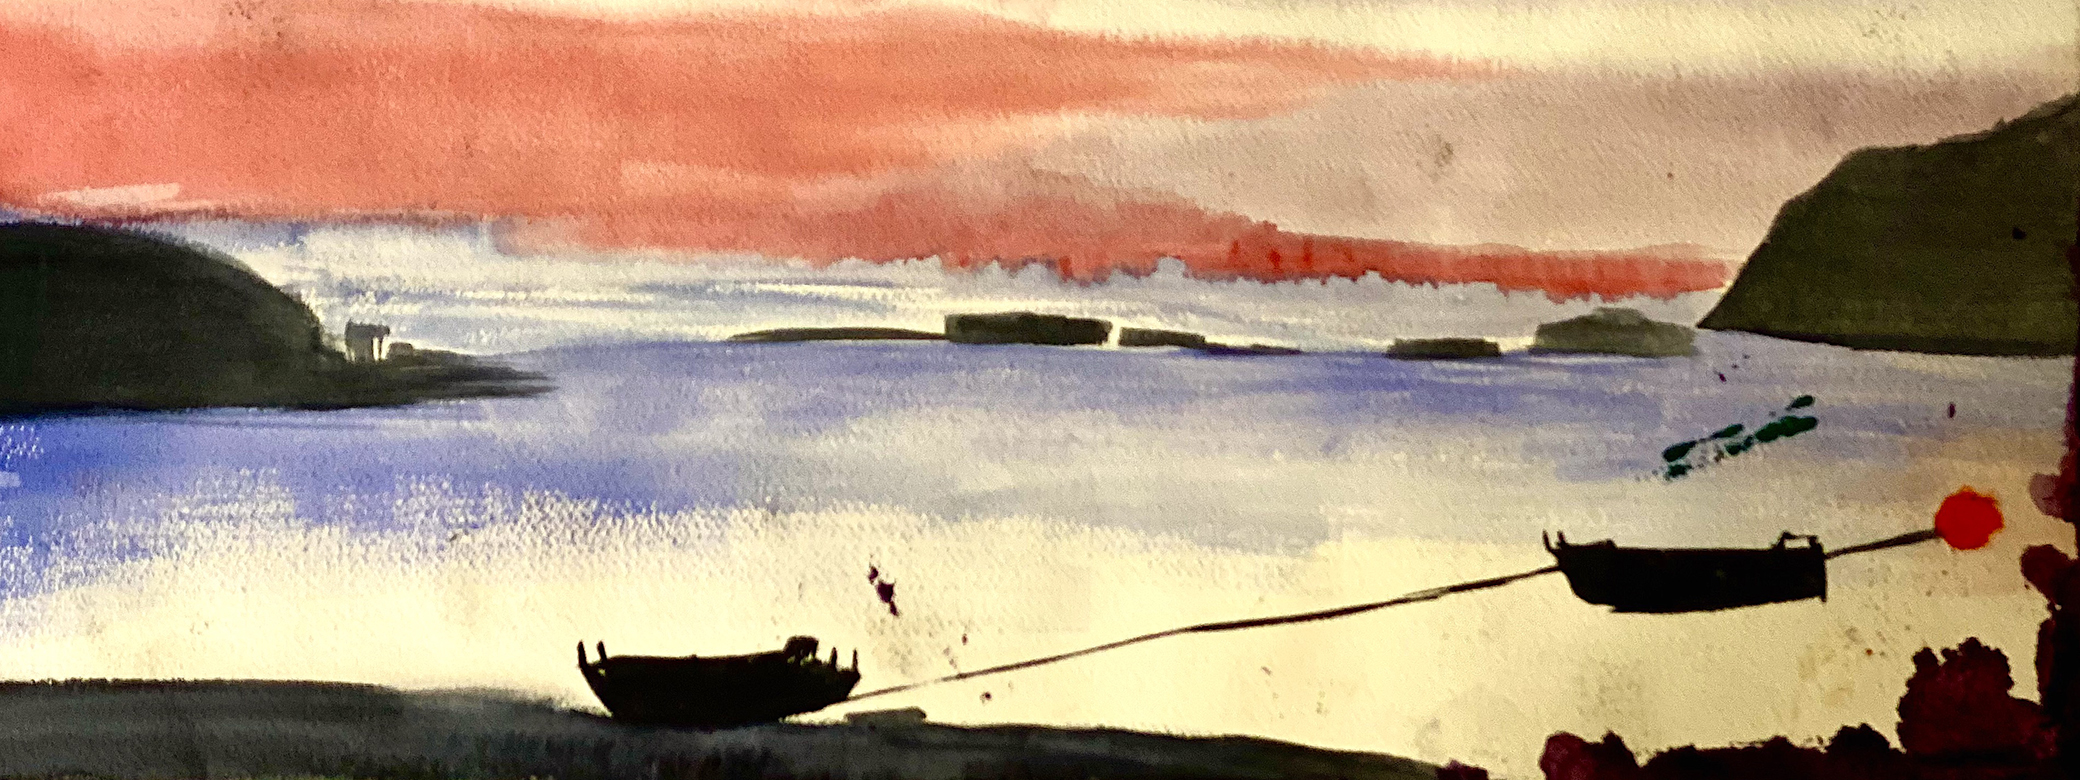 Watercolor of an Alaskan bay by Leslie Jeanne Berns